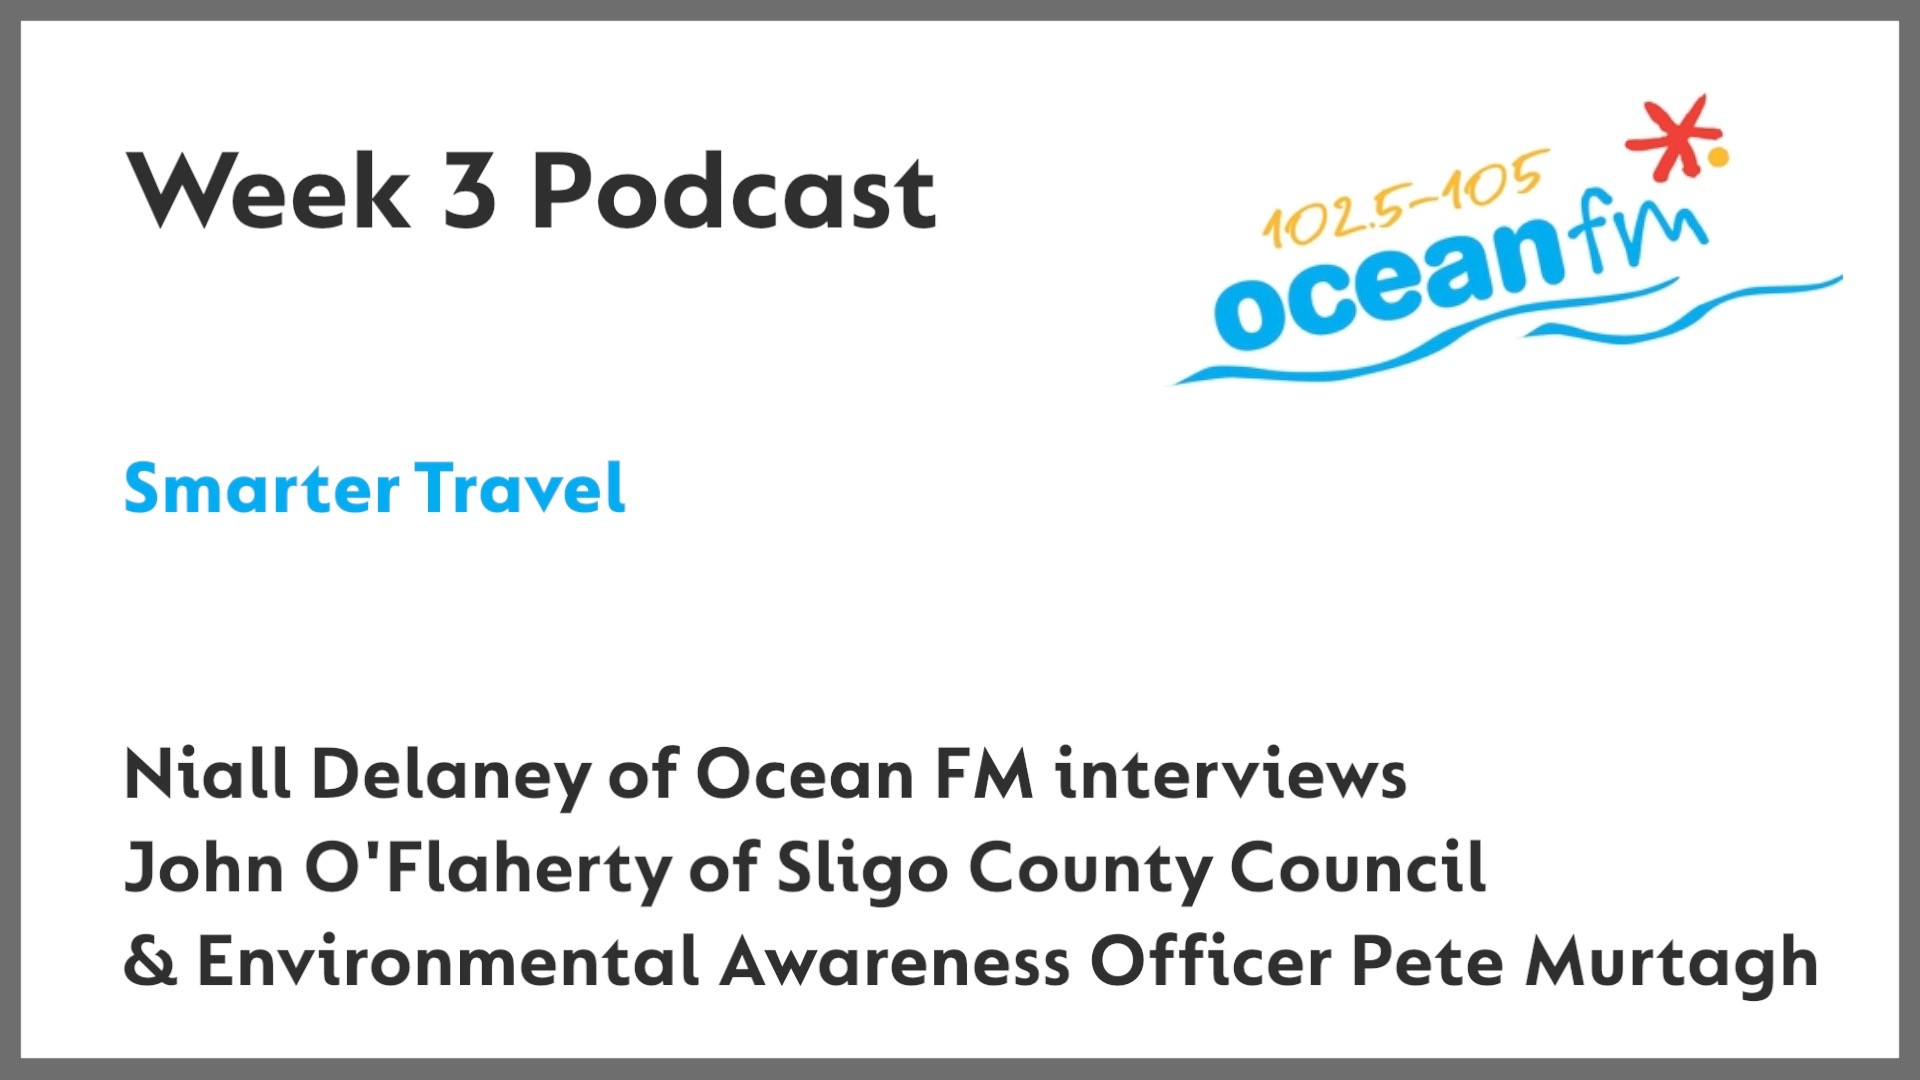 Smarter Travel interview on Ocean FM